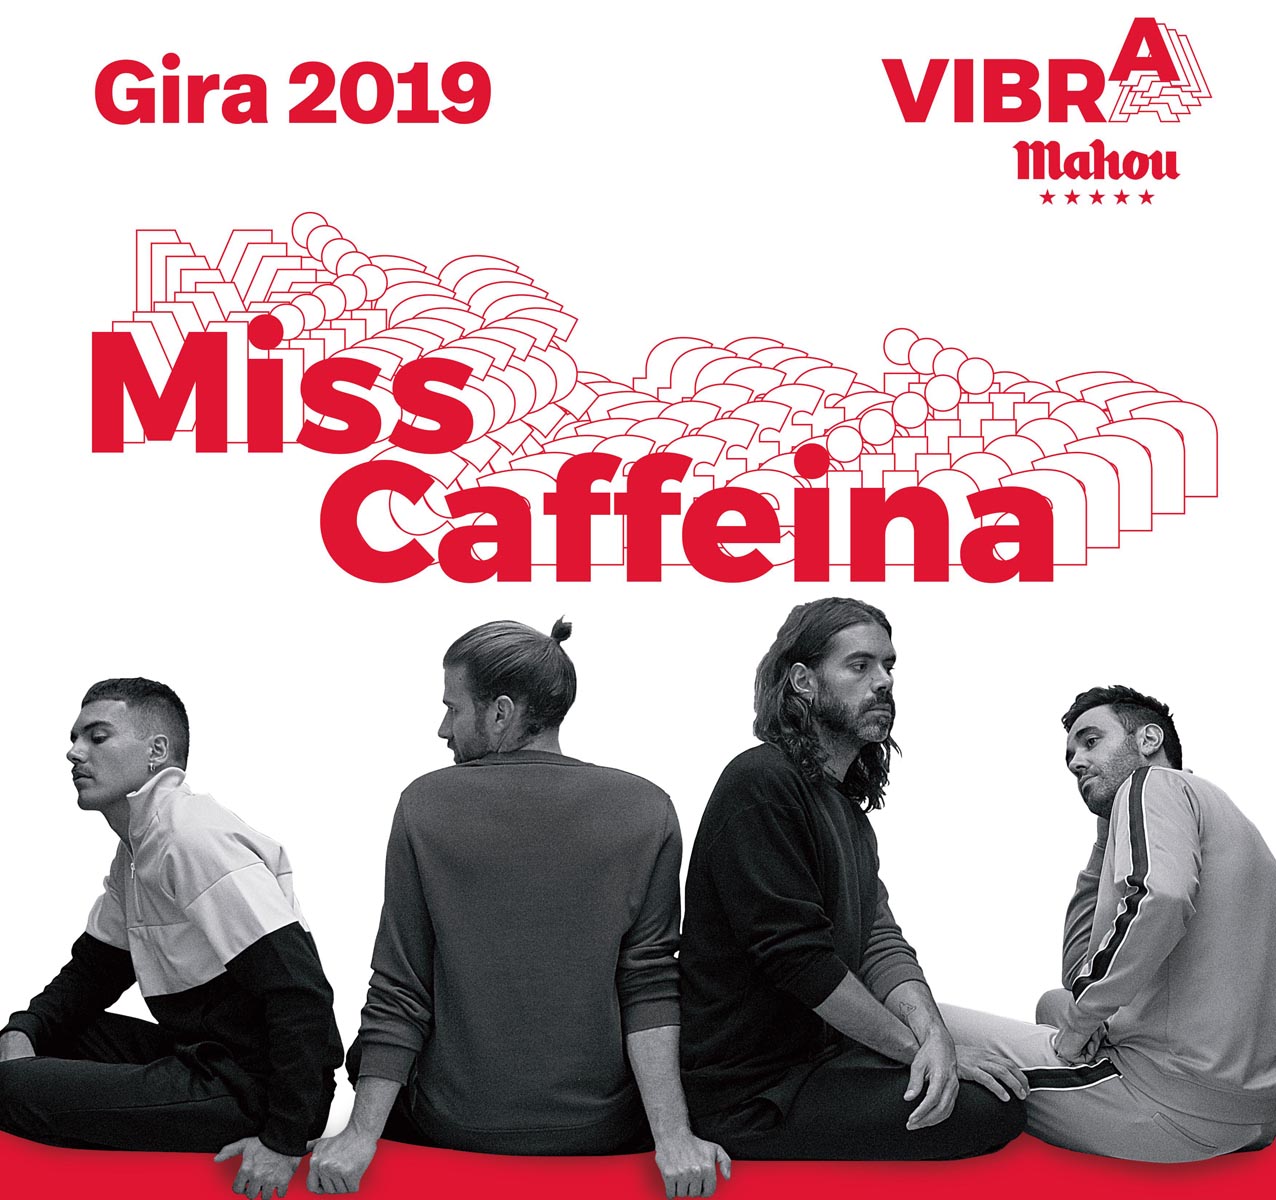 Cartel de la Gira Vibra Mahou 2019 con Miss Caffeina.